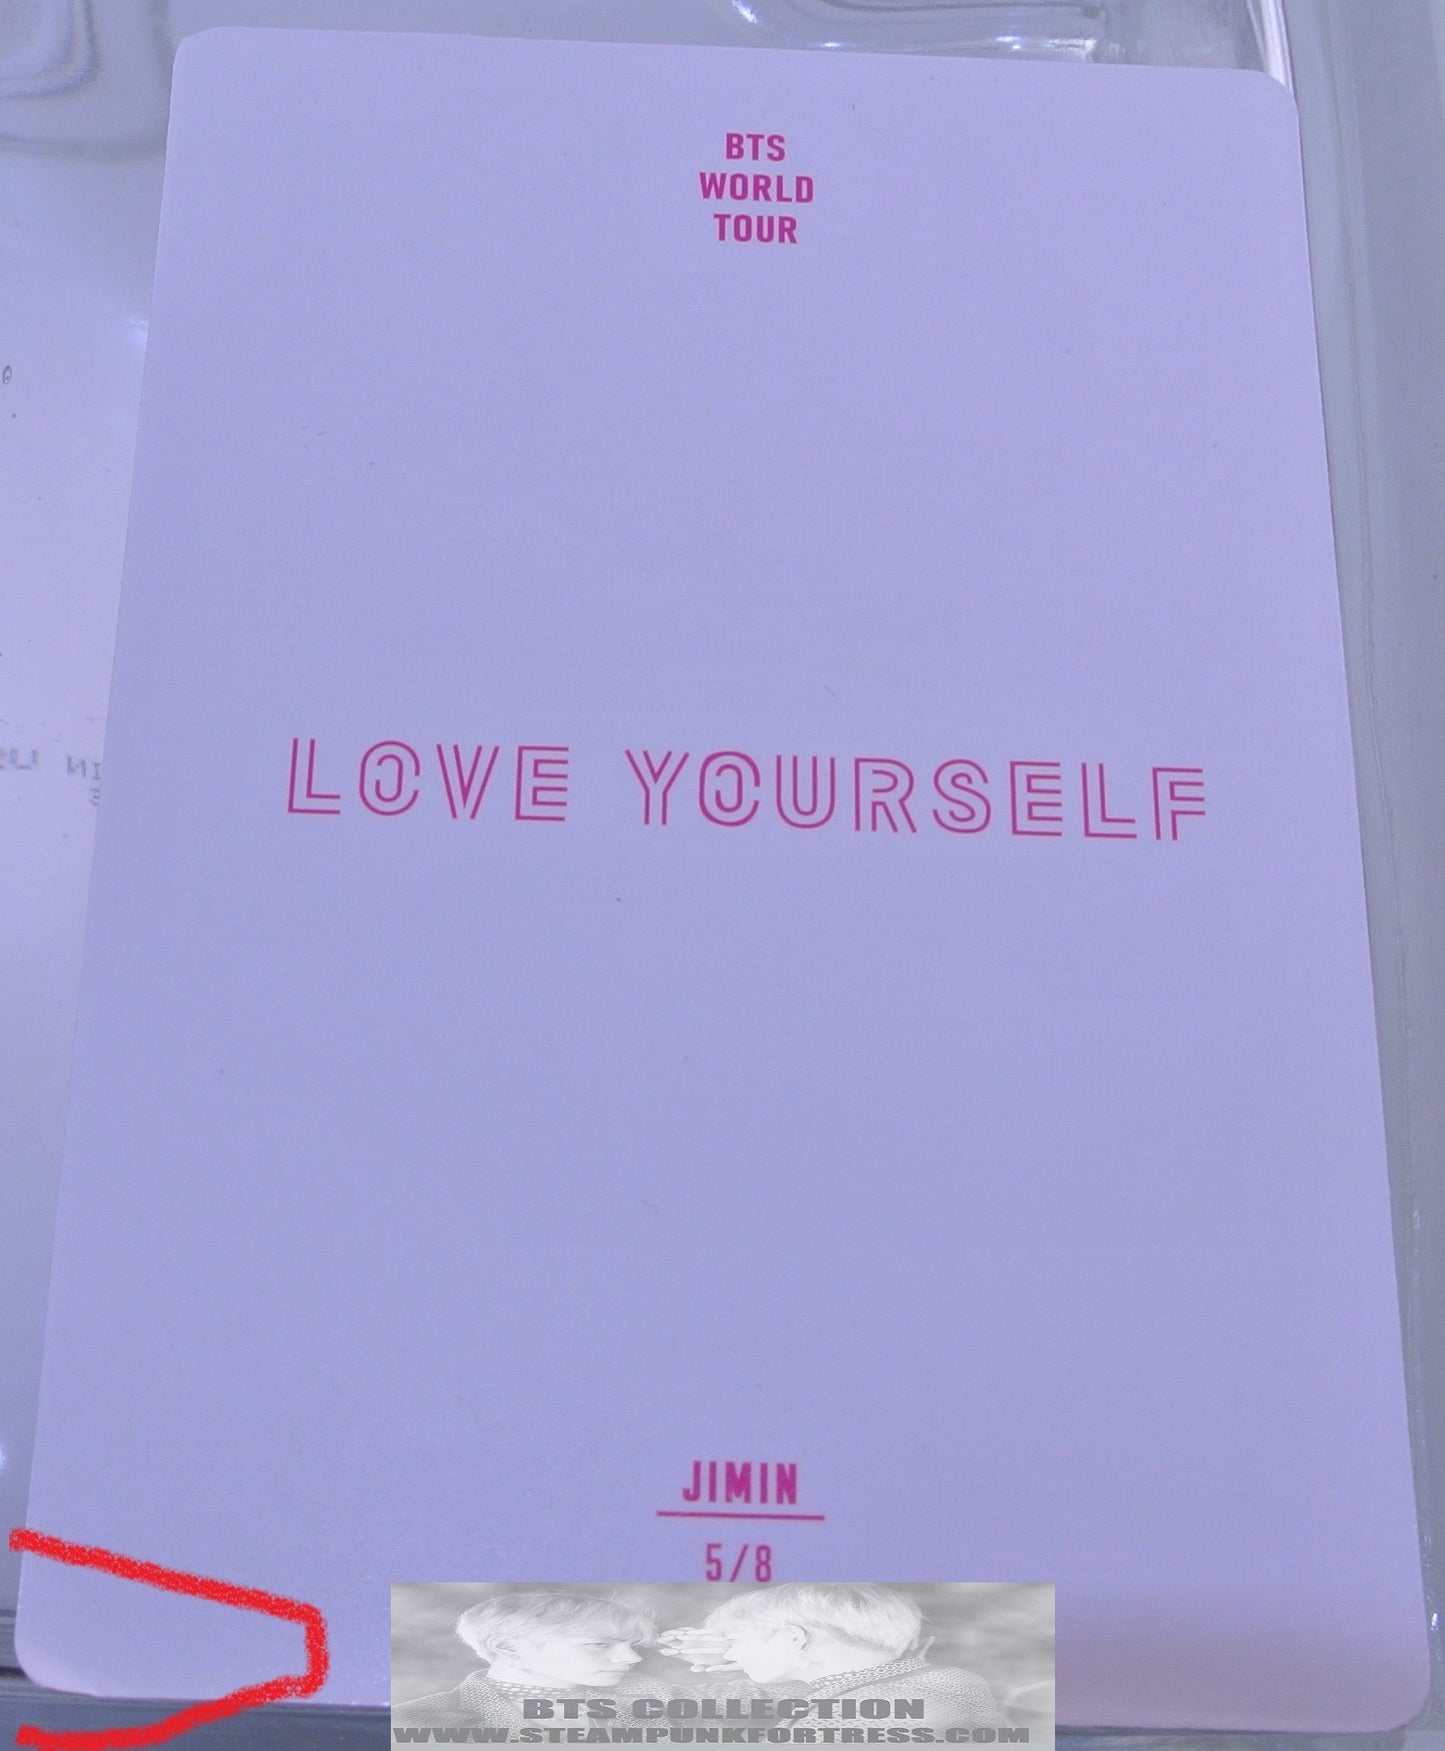 BTS PARK JIMIN LOVE YOURSELF WORLD TOUR PHOTOCARD PHOTO CARD #5 OFFICIAL MERCHANDISE